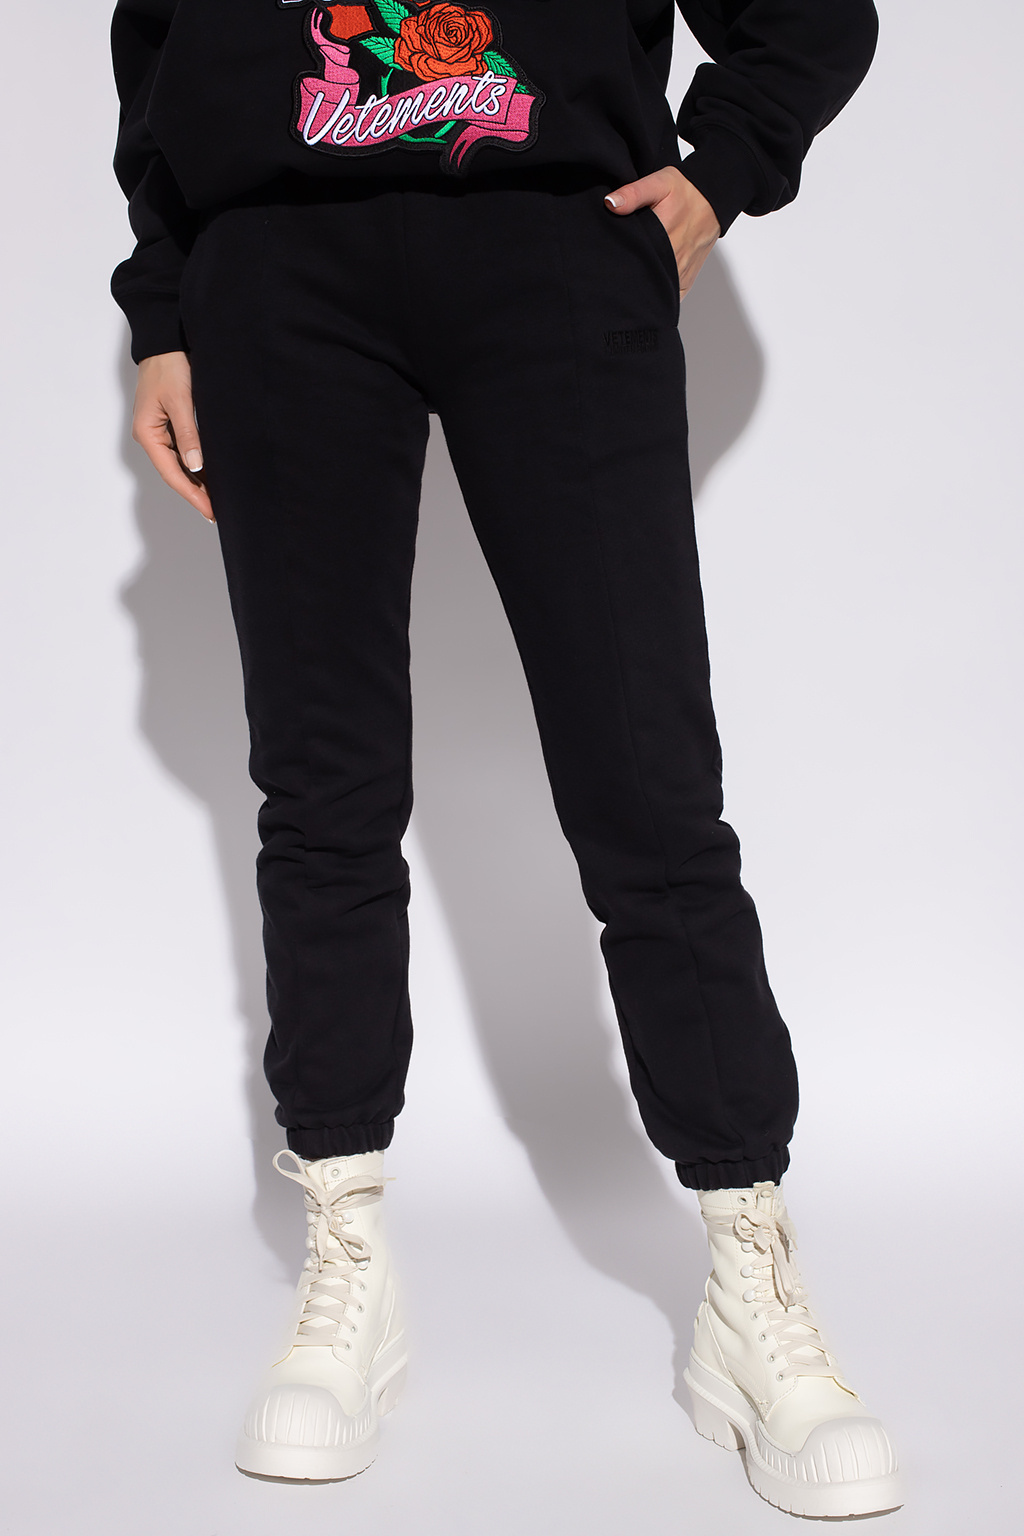 Hollister women’s medium gray sweatpants with embroidery on left leg.